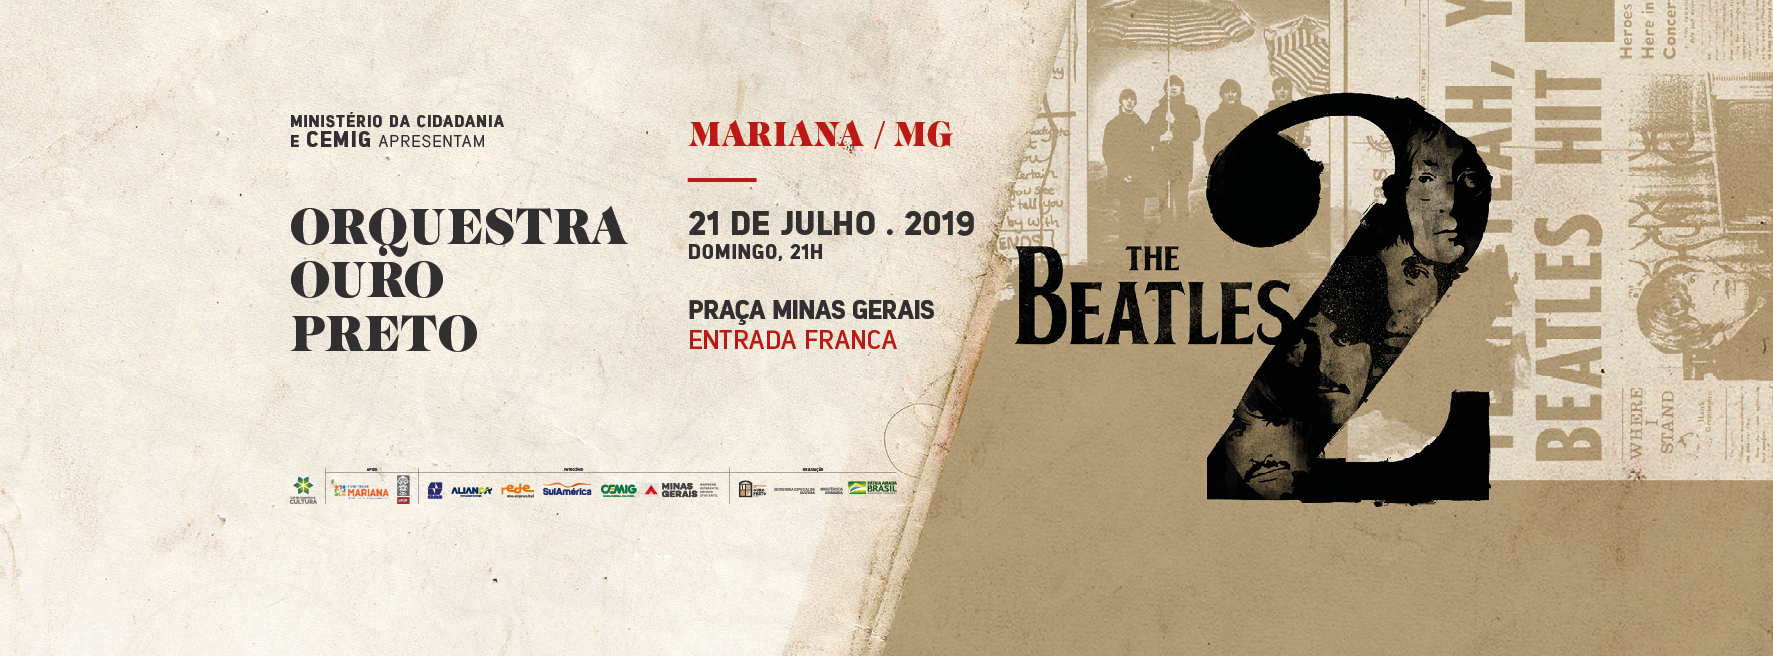 Beatles 2, em Mariana!